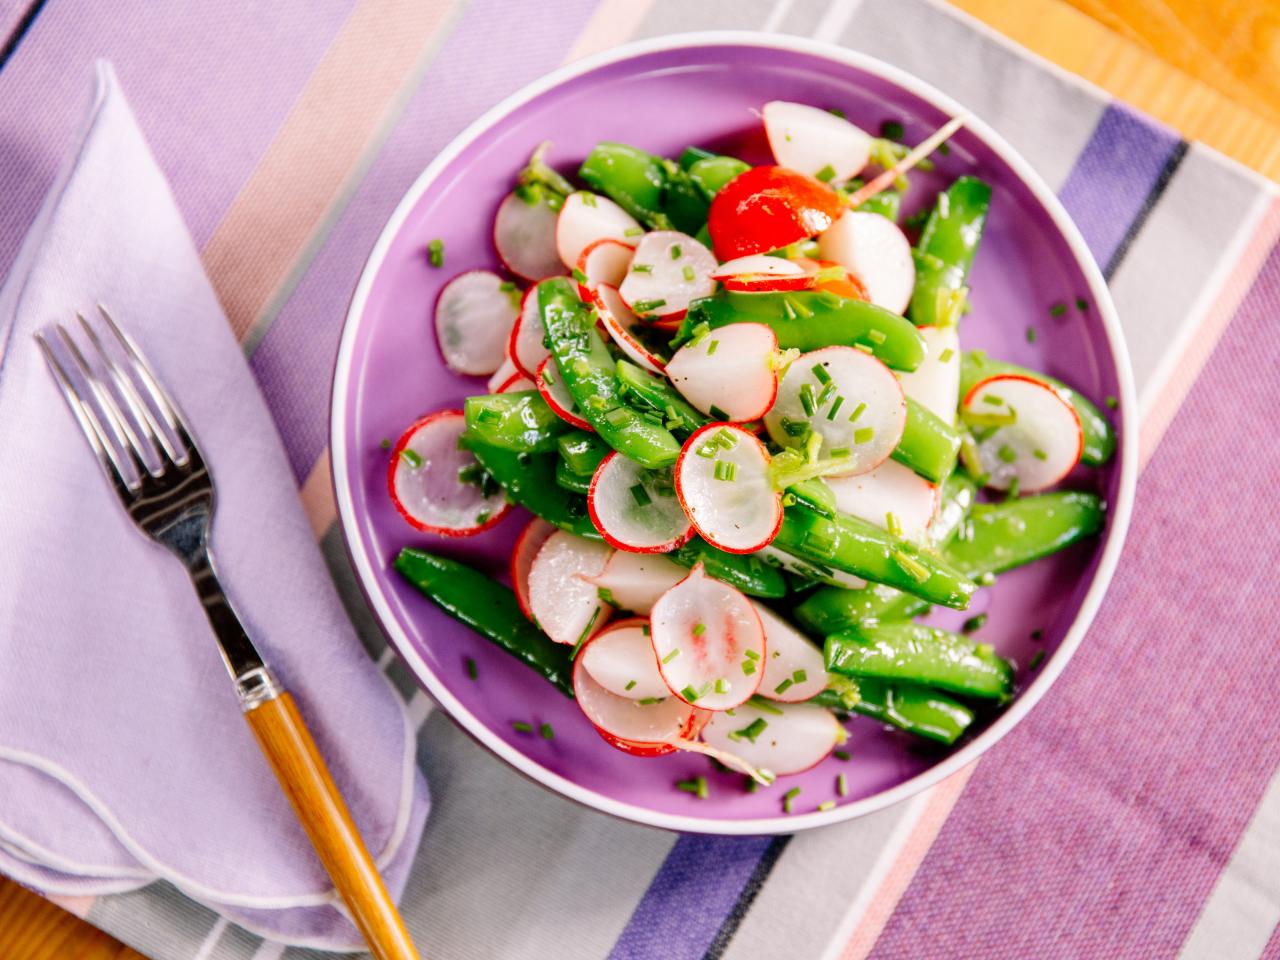 Sugar Snap Pea Salad - Kosher Everyday